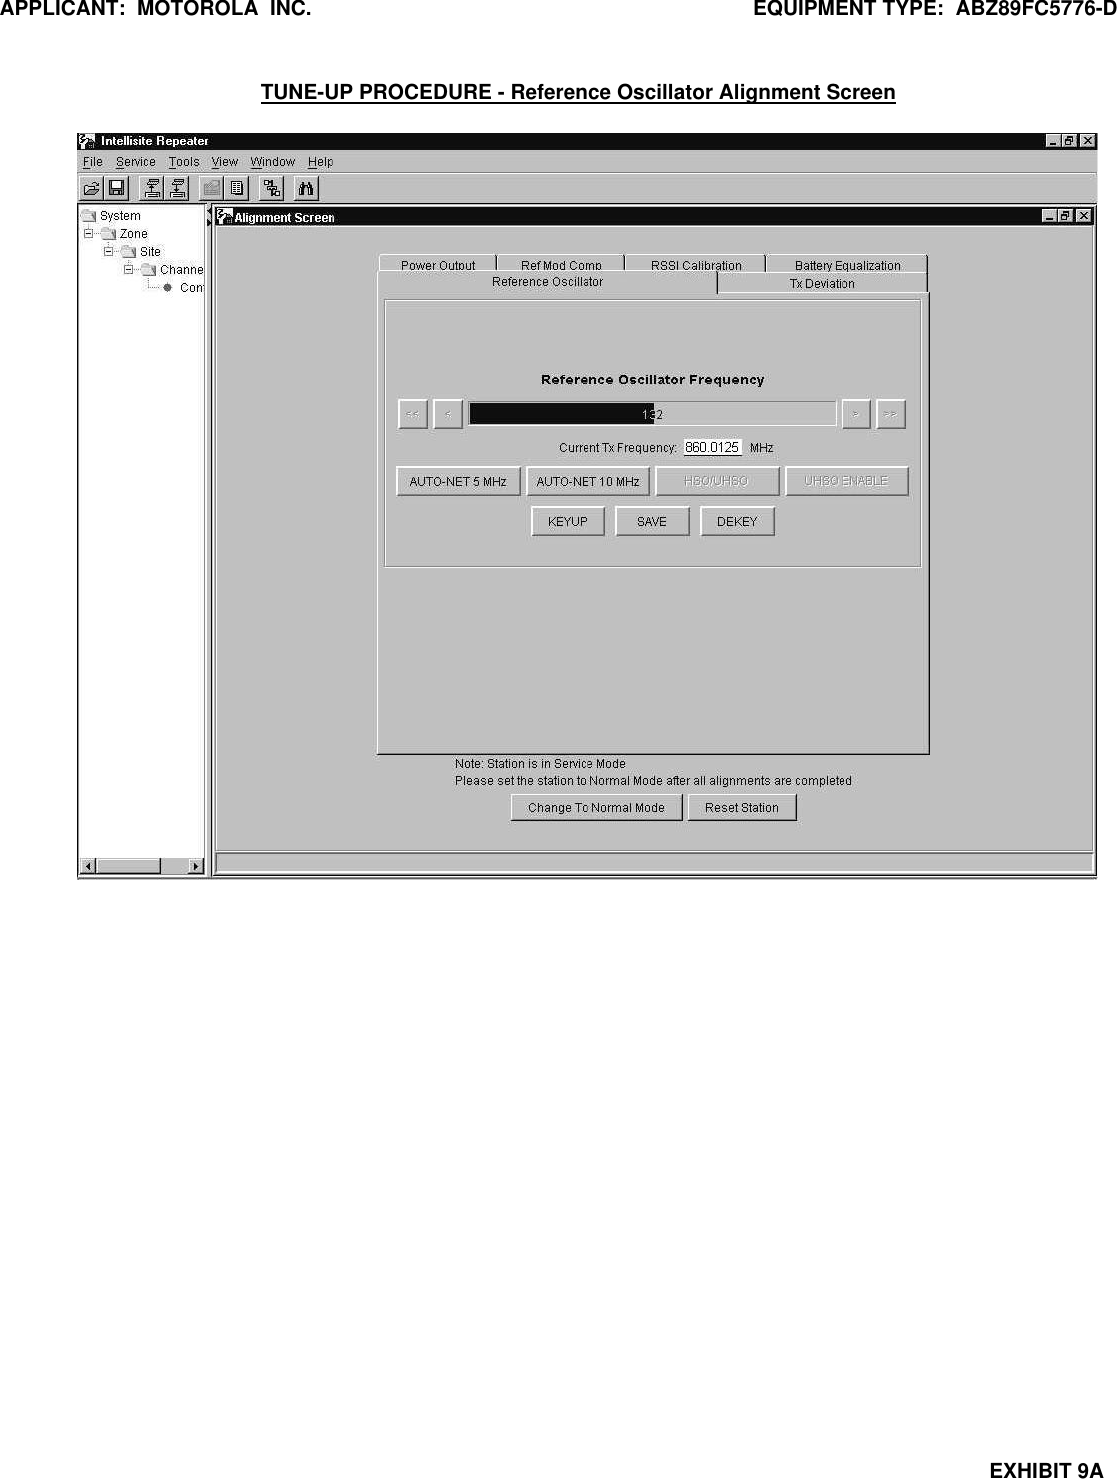 APPLICANT:  MOTOROLA  INC. EQUIPMENT TYPE:  ABZ89FC5776-DEXHIBIT 9ATUNE-UP PROCEDURE - Reference Oscillator Alignment Screen